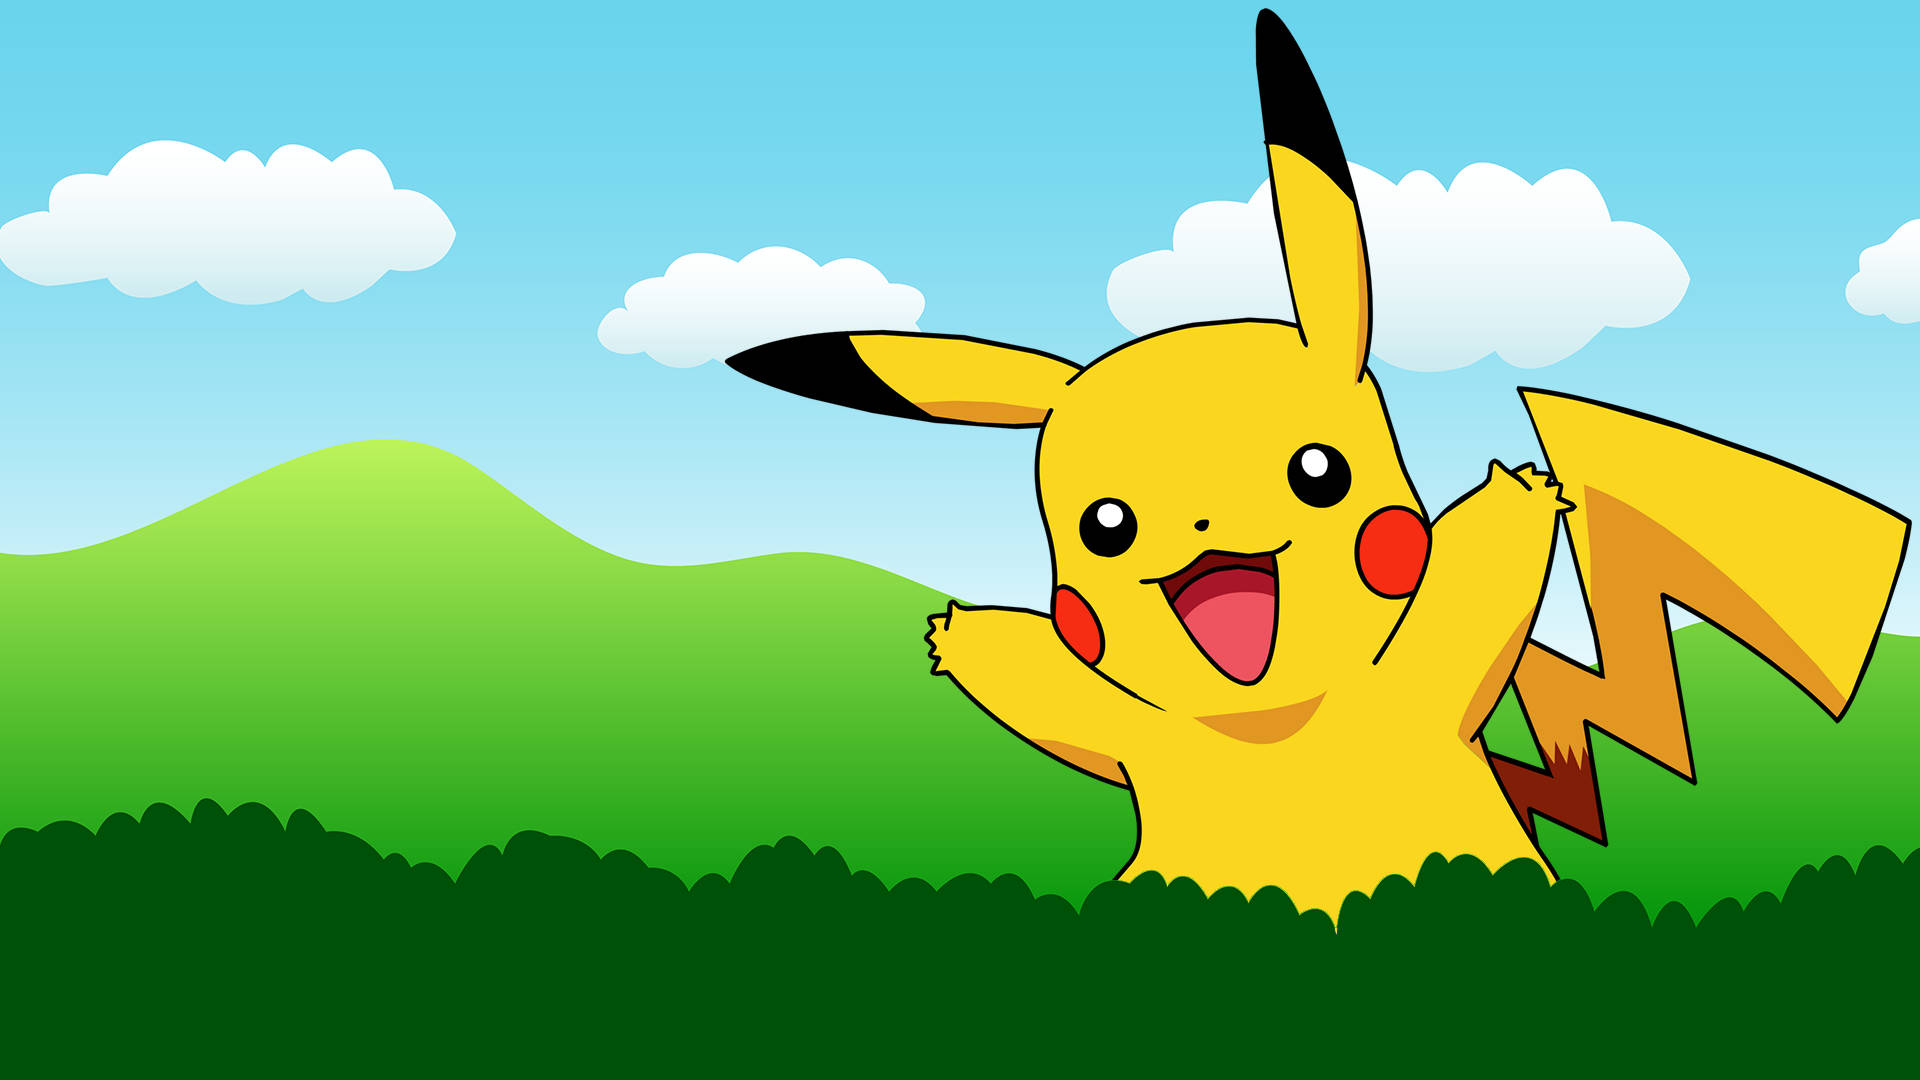 Pikachu Cartoon Image Background